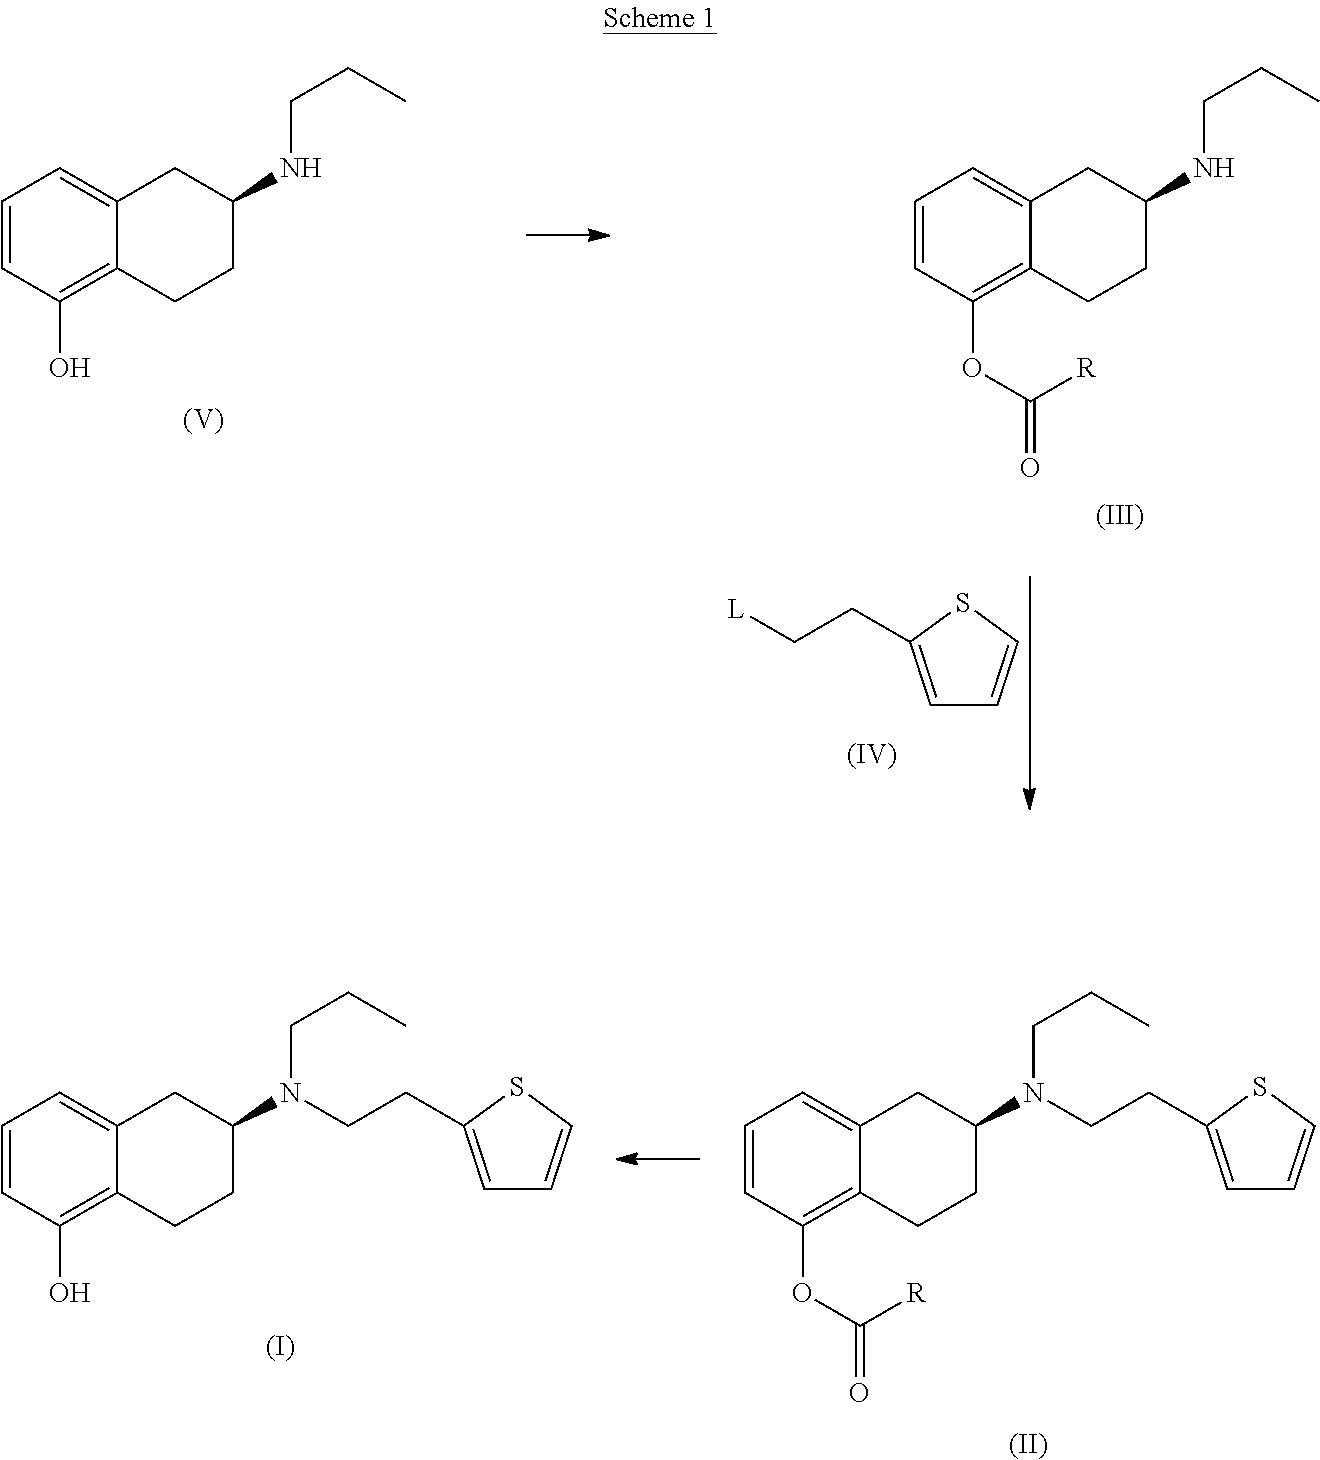 Process for the preparation of (6S)-(-)-5,6,7,8-tetrahydro-6-[propyl-(2-thienyl)ethyl]amino-1-naphthol (rotigotine)